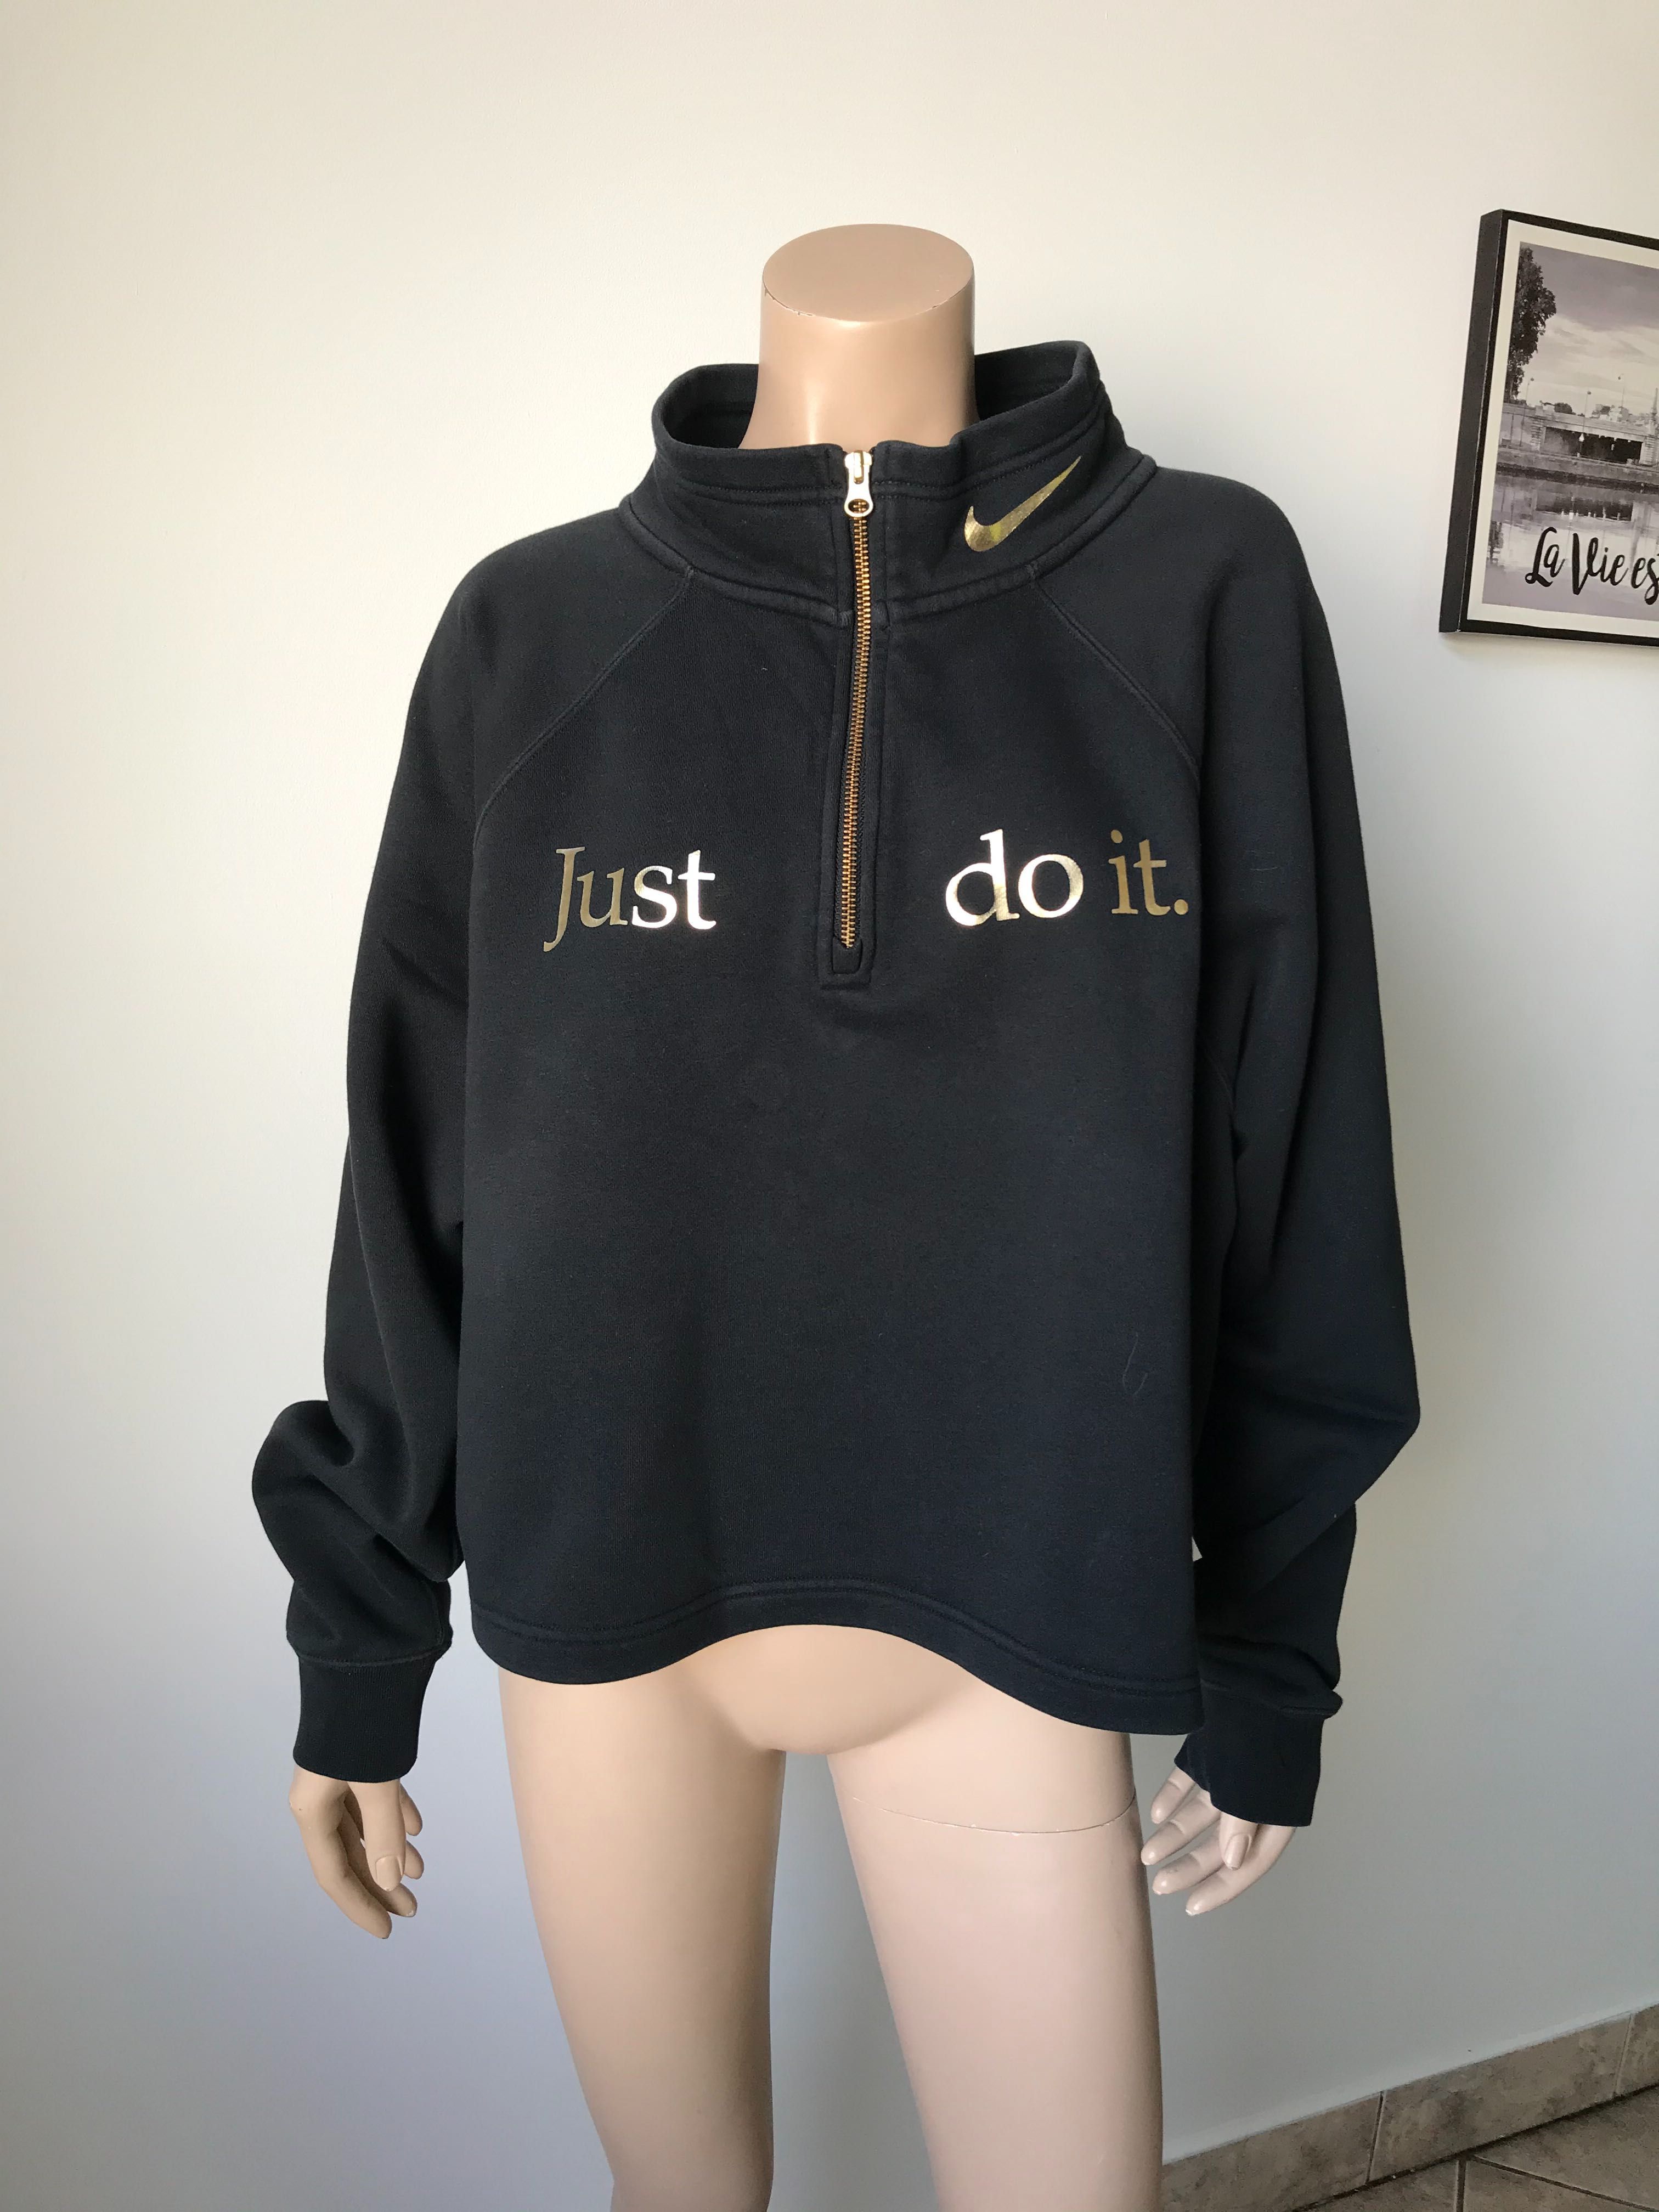 Nike Just Do It bluza damska XL złote napisy.